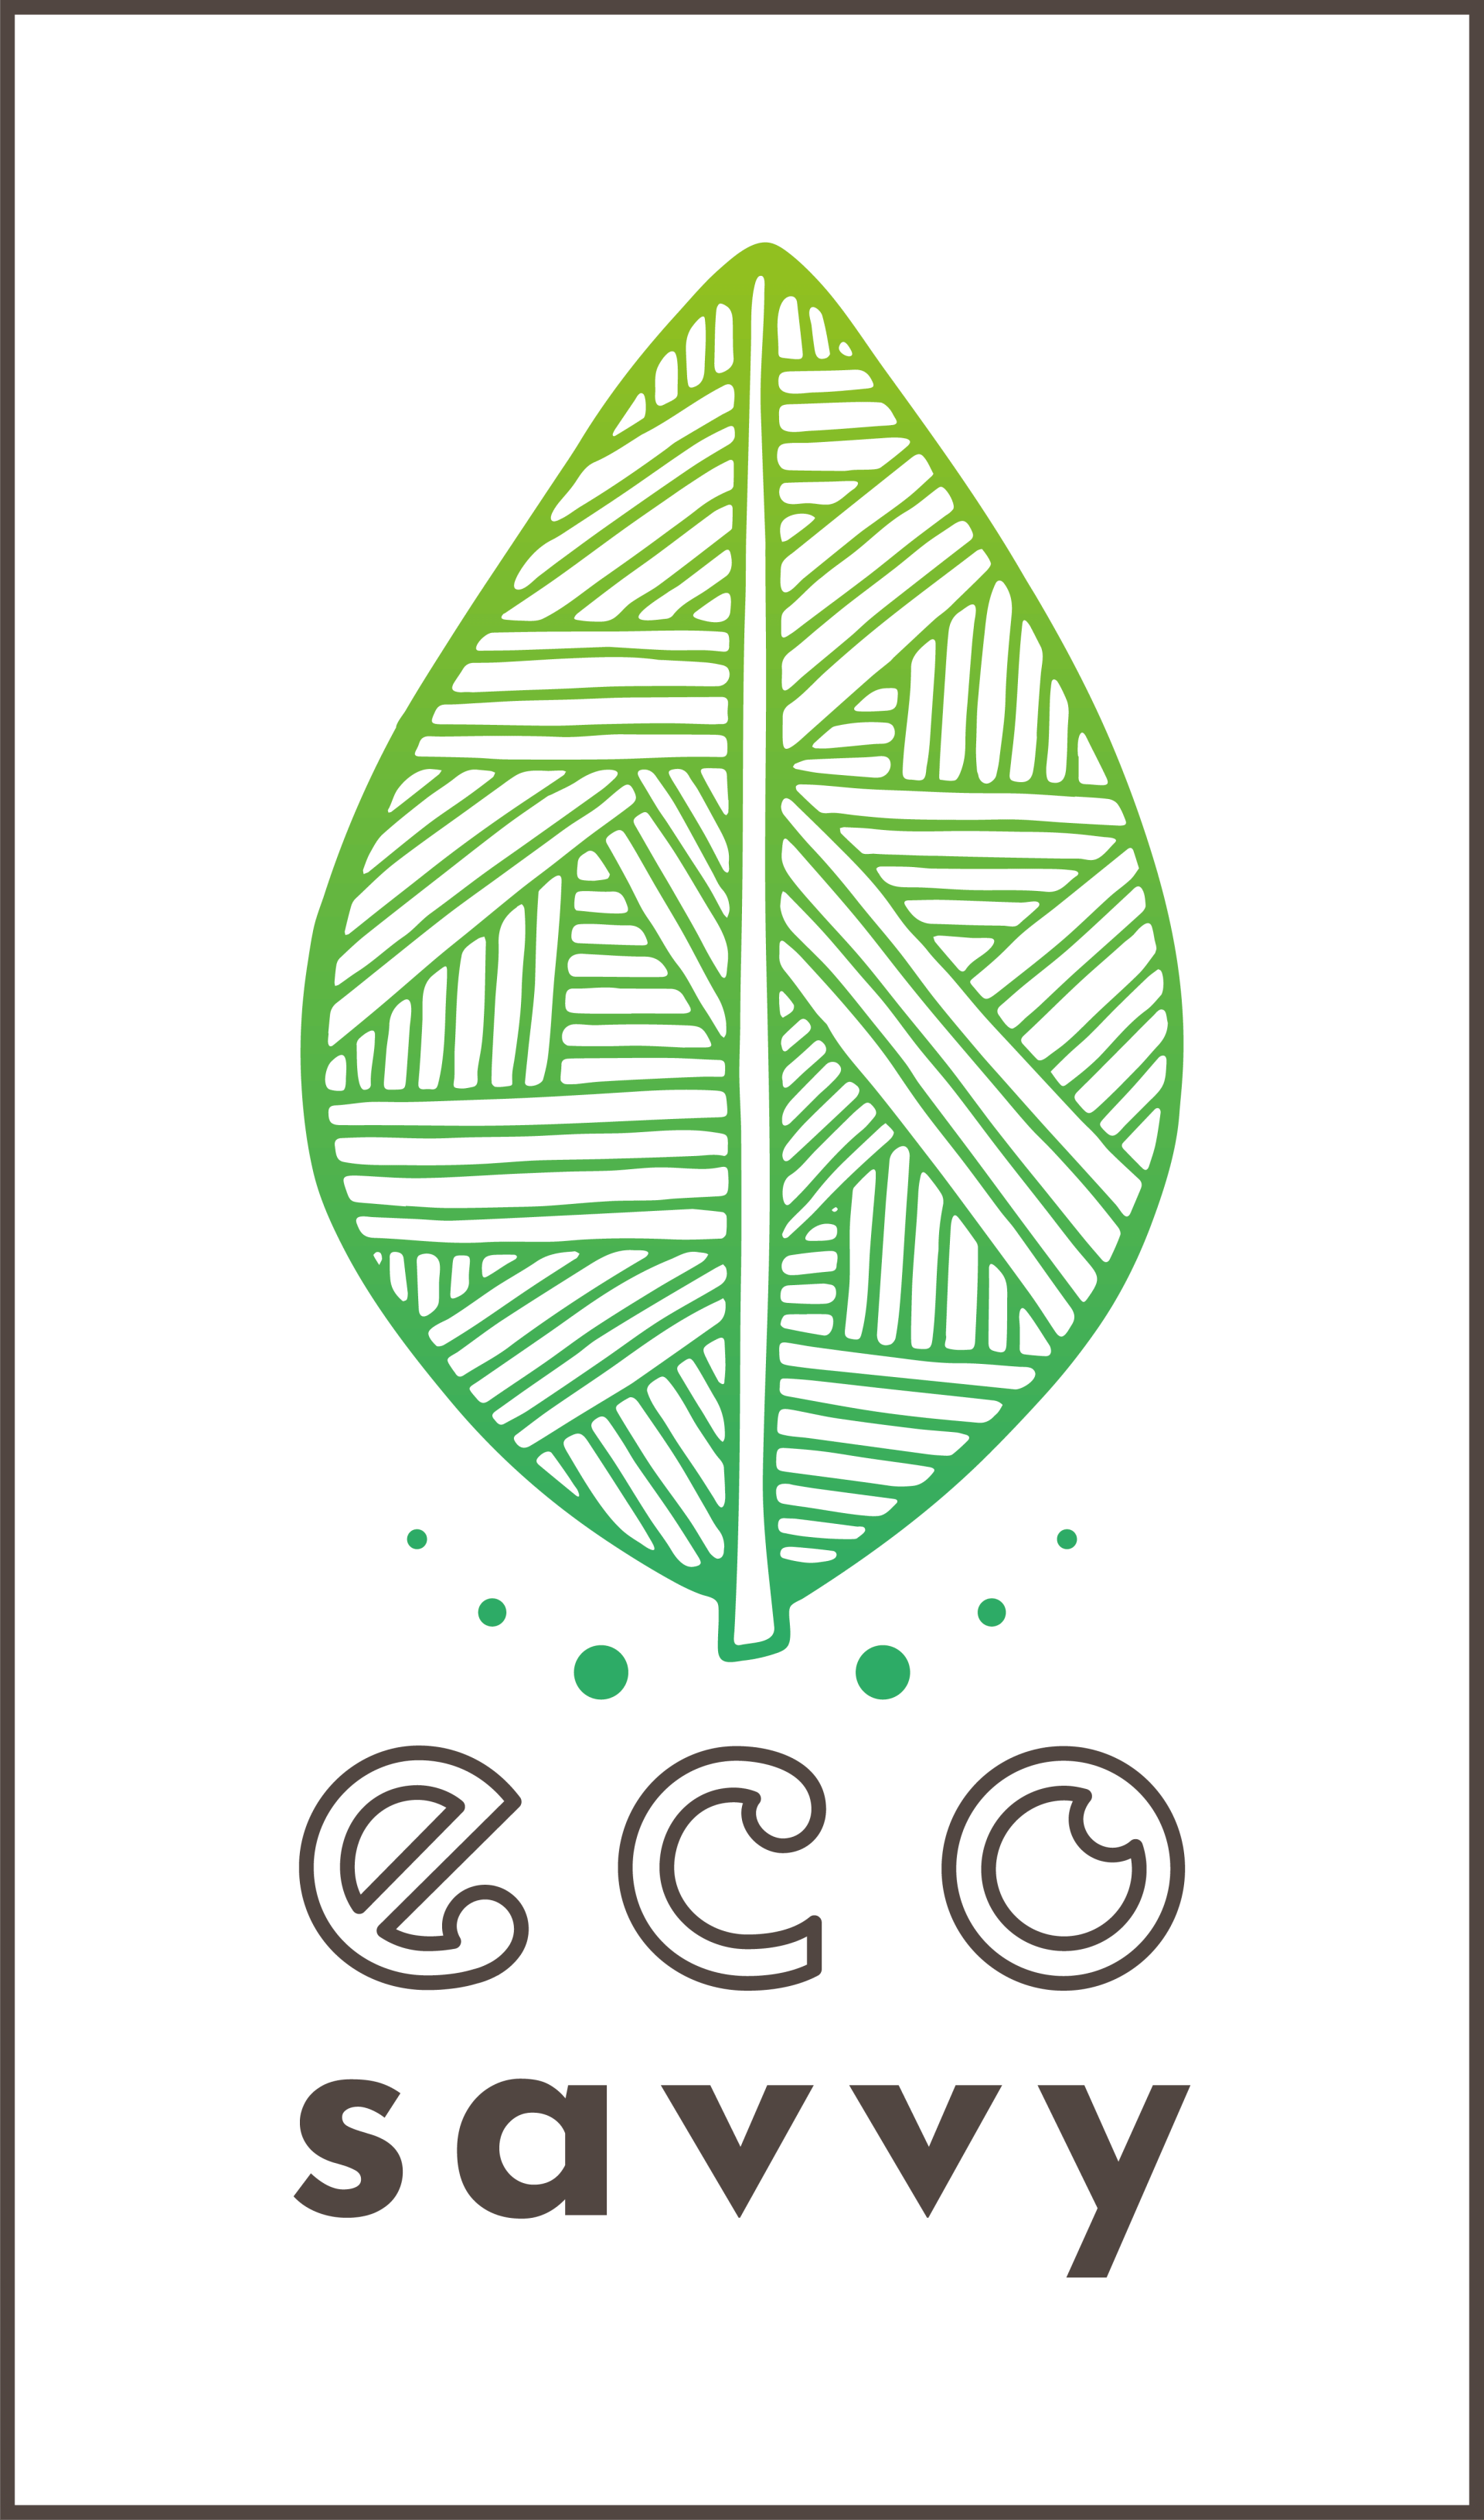 Eco Savvy logo